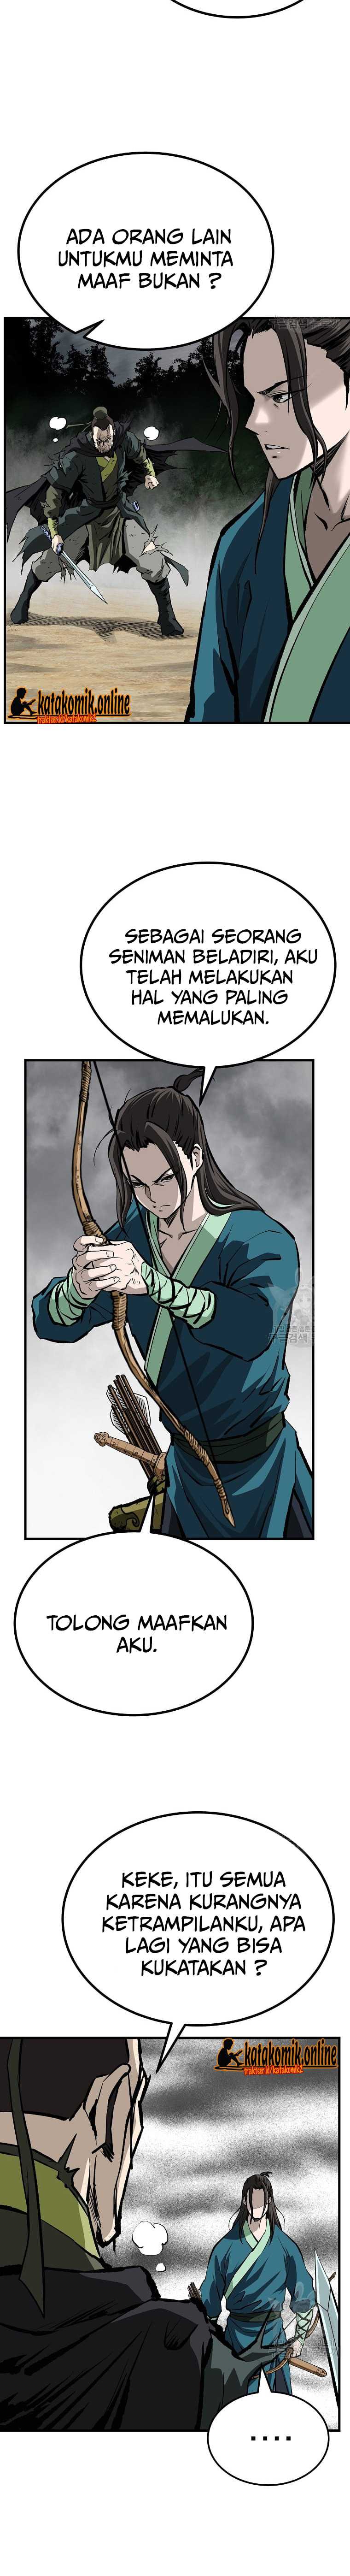 Archer Sword God : Descendants of the Archer Chapter 33